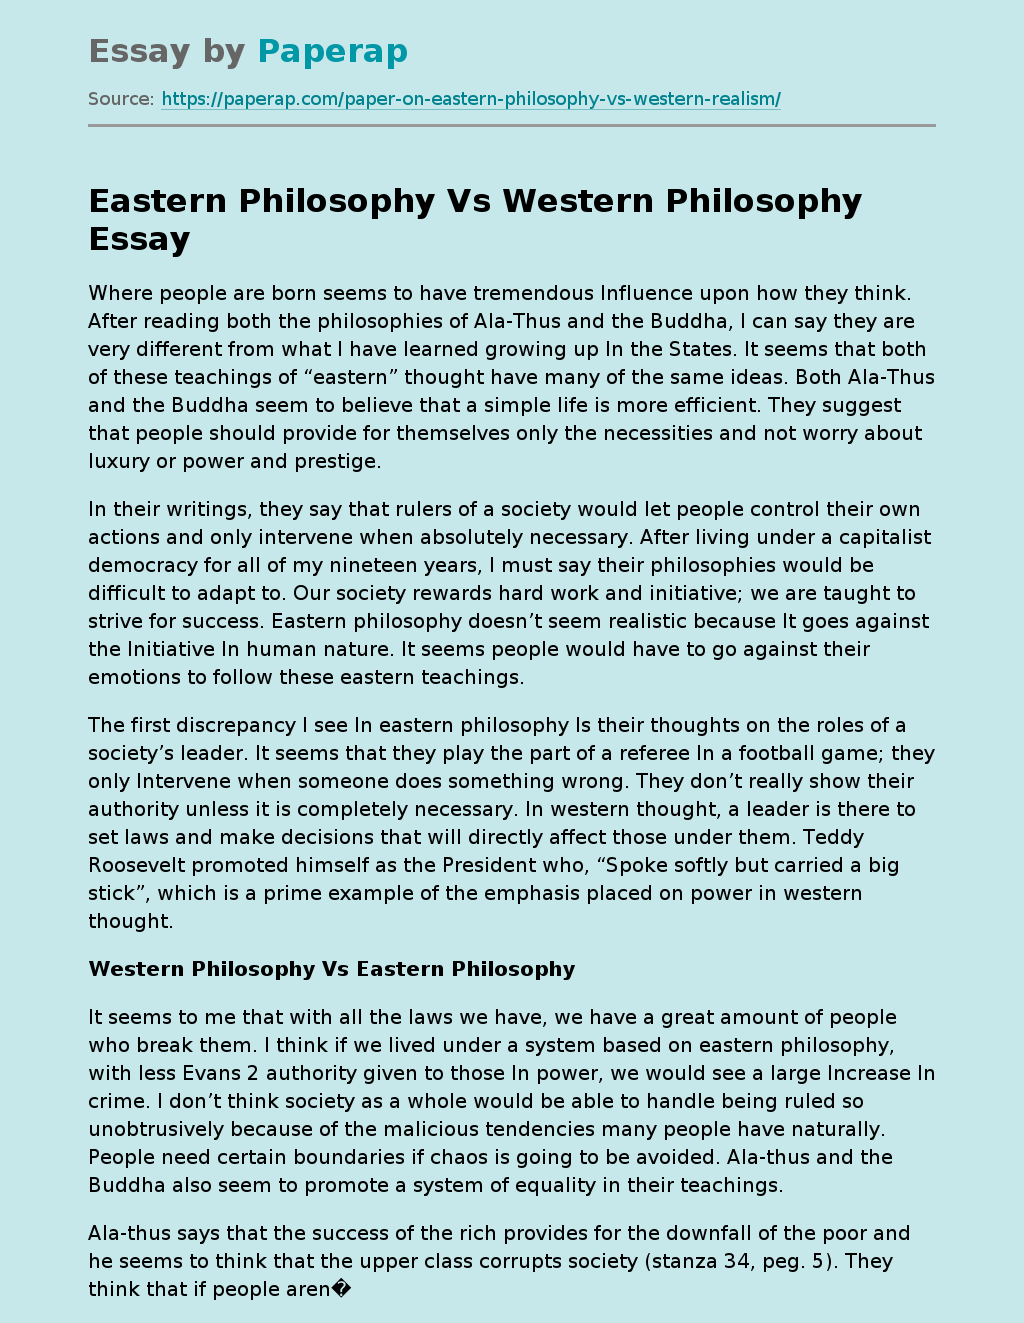 Eastern Philosophy Vs Western Philosophy